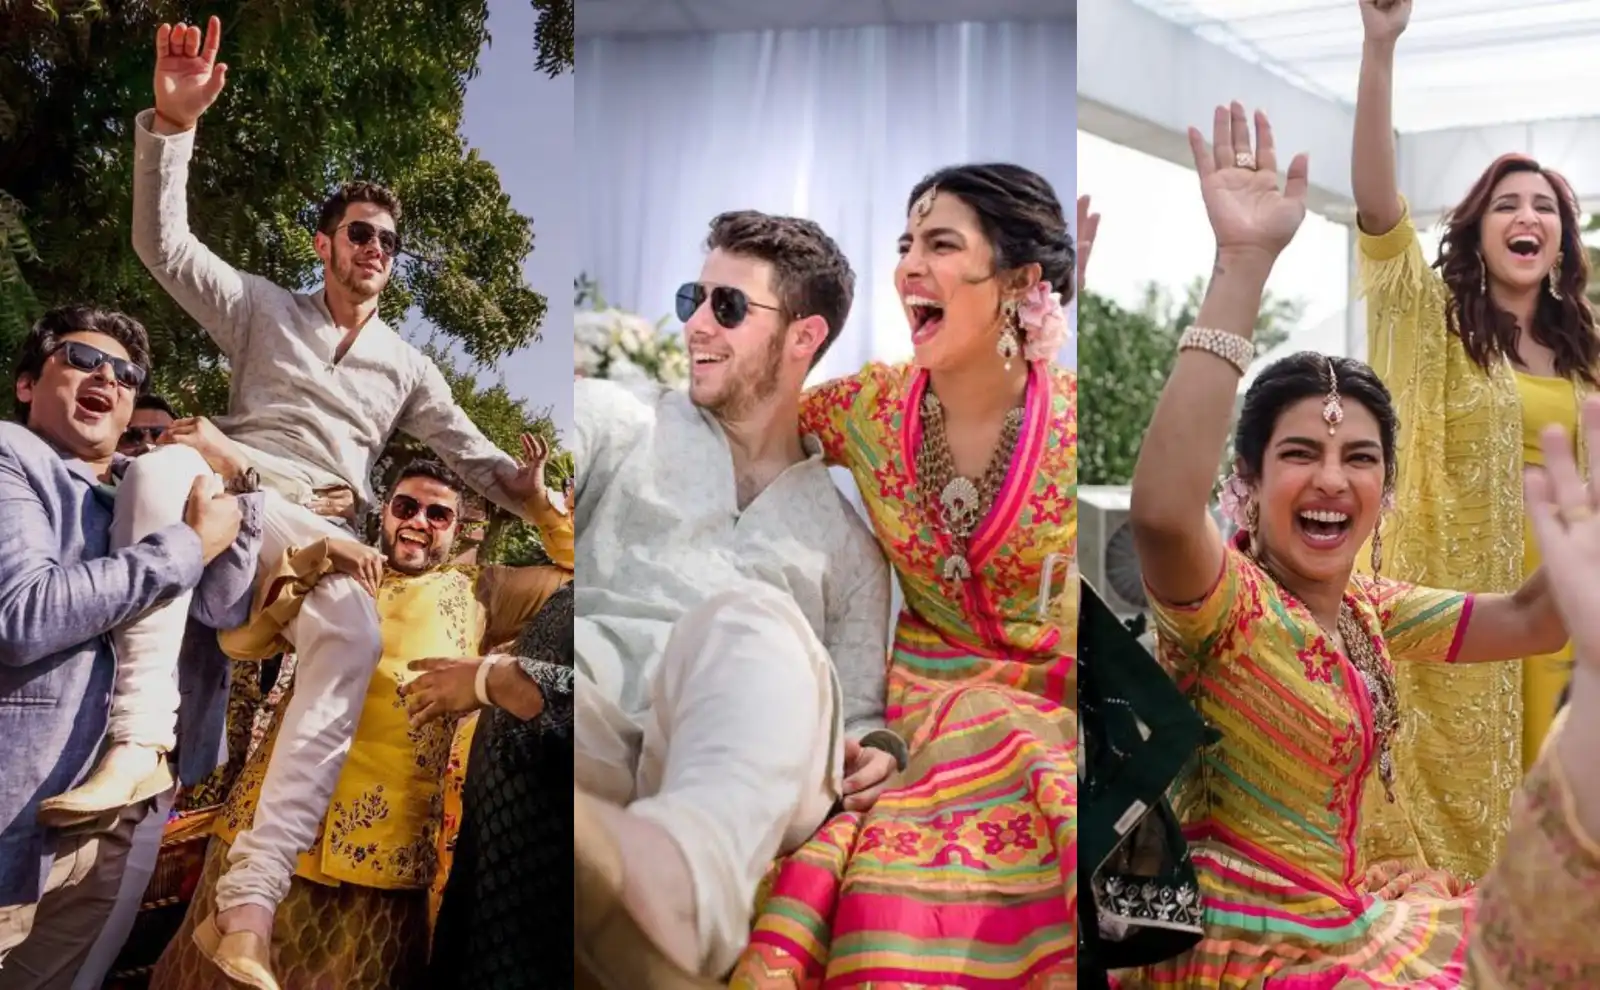 NickYankaWedding: The Pictures From Priyanka's Mehendi Ceremony Are Here!